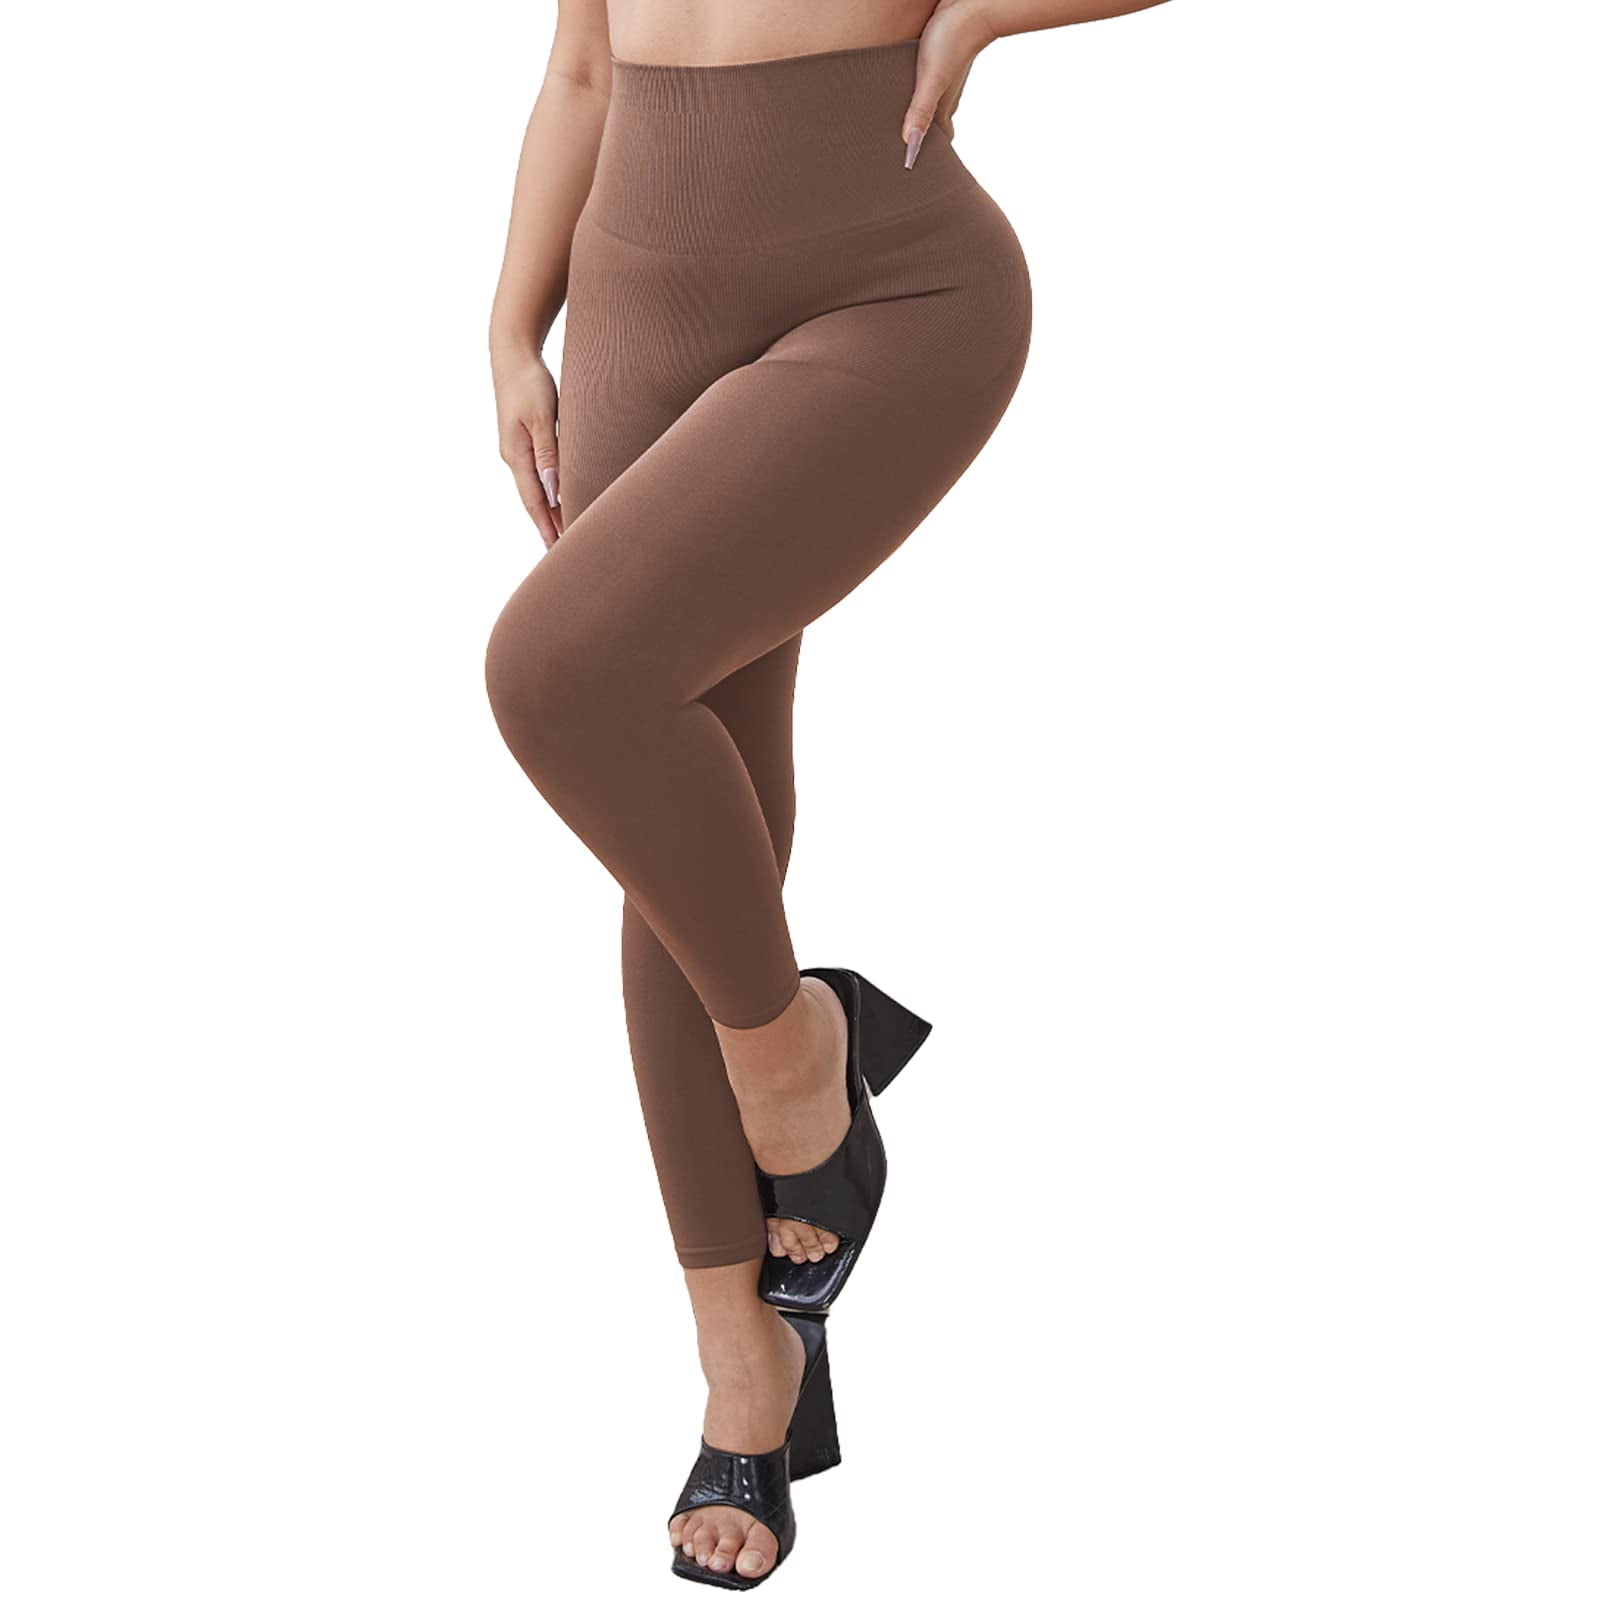 shaping hi-waist legging, firm control - Walmart.com